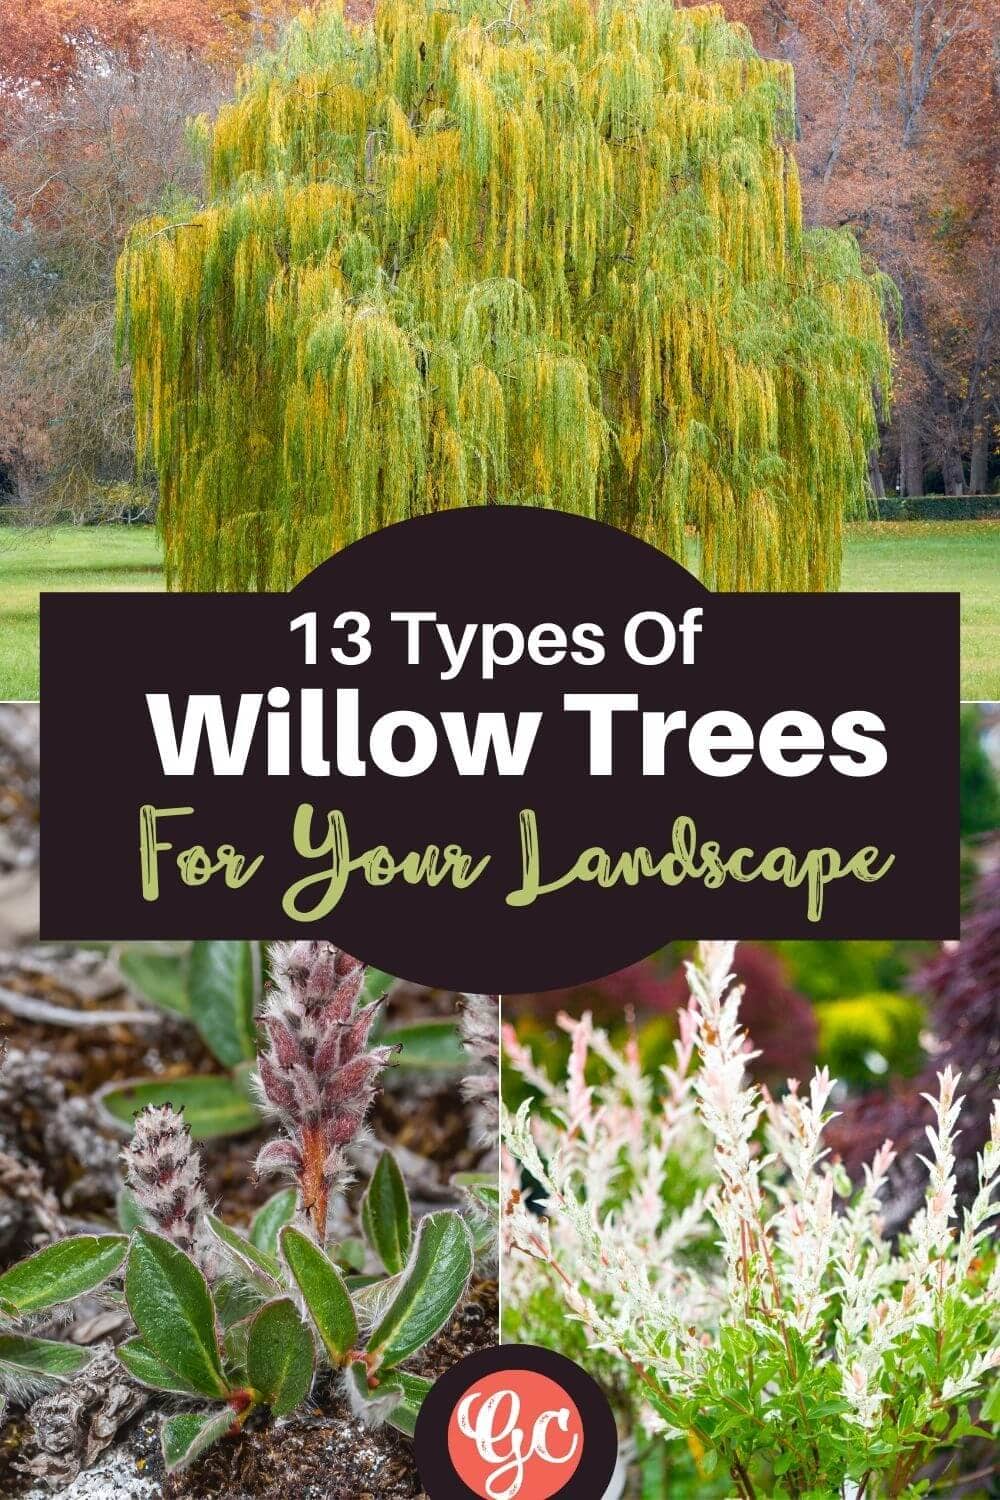 13 Types Of Willow Trees & Shrubs To Plant